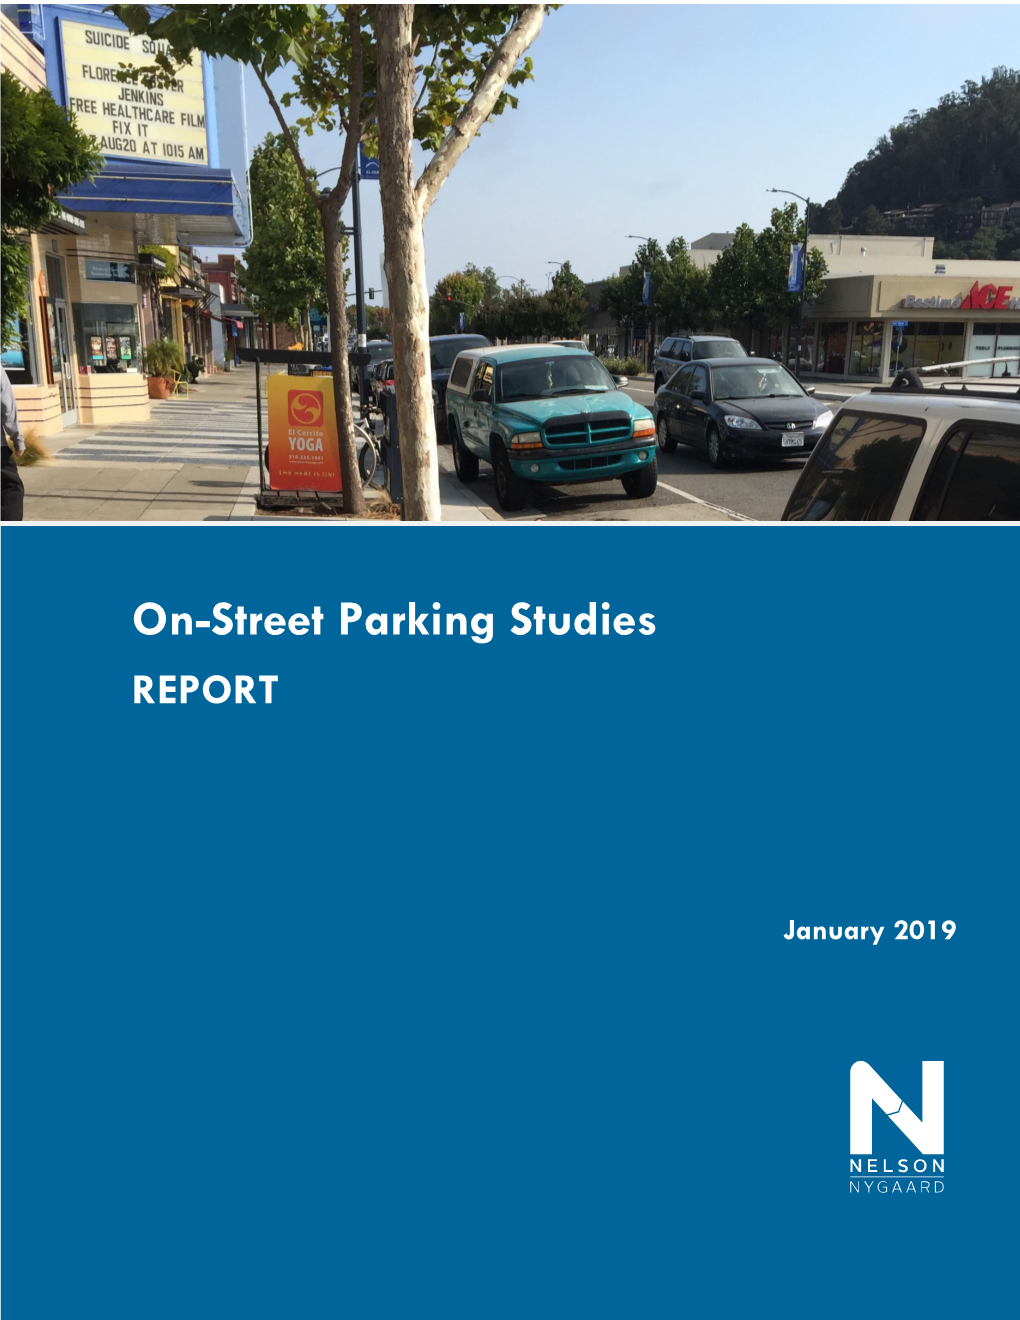 On-Street Parking Study Report